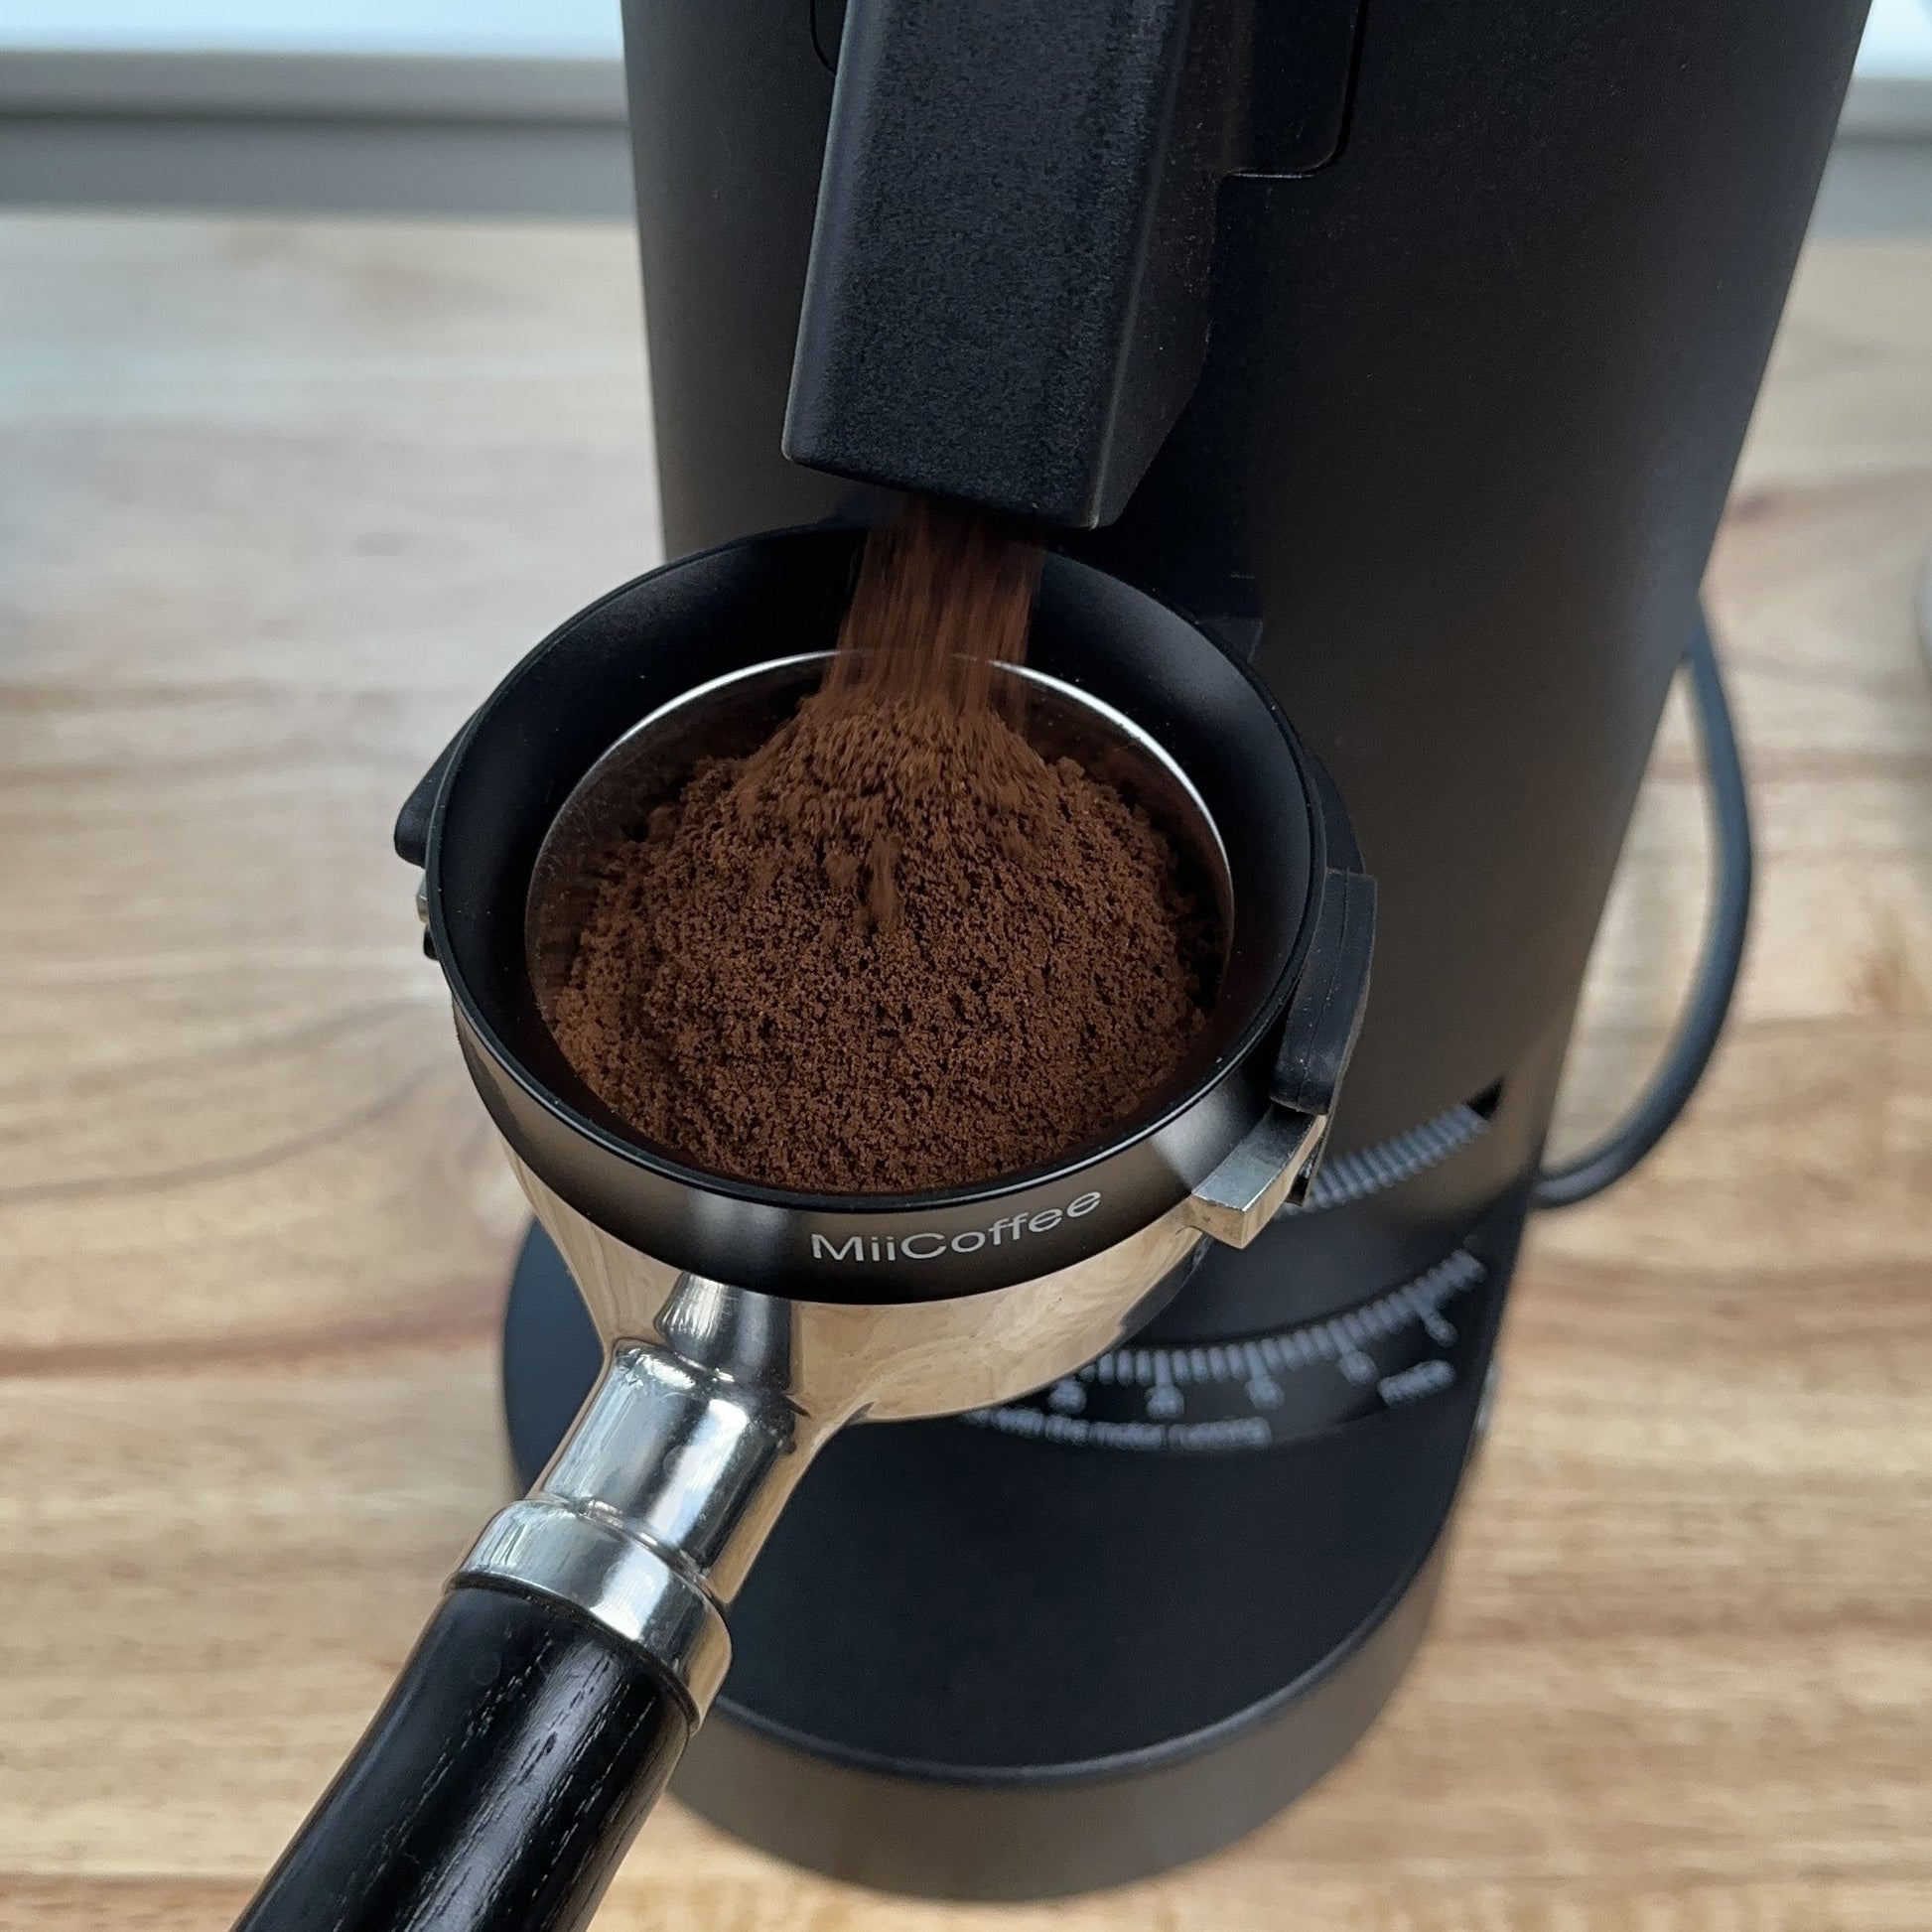 MiiCoffee DF64 II Single Dose Coffee Grinder Black